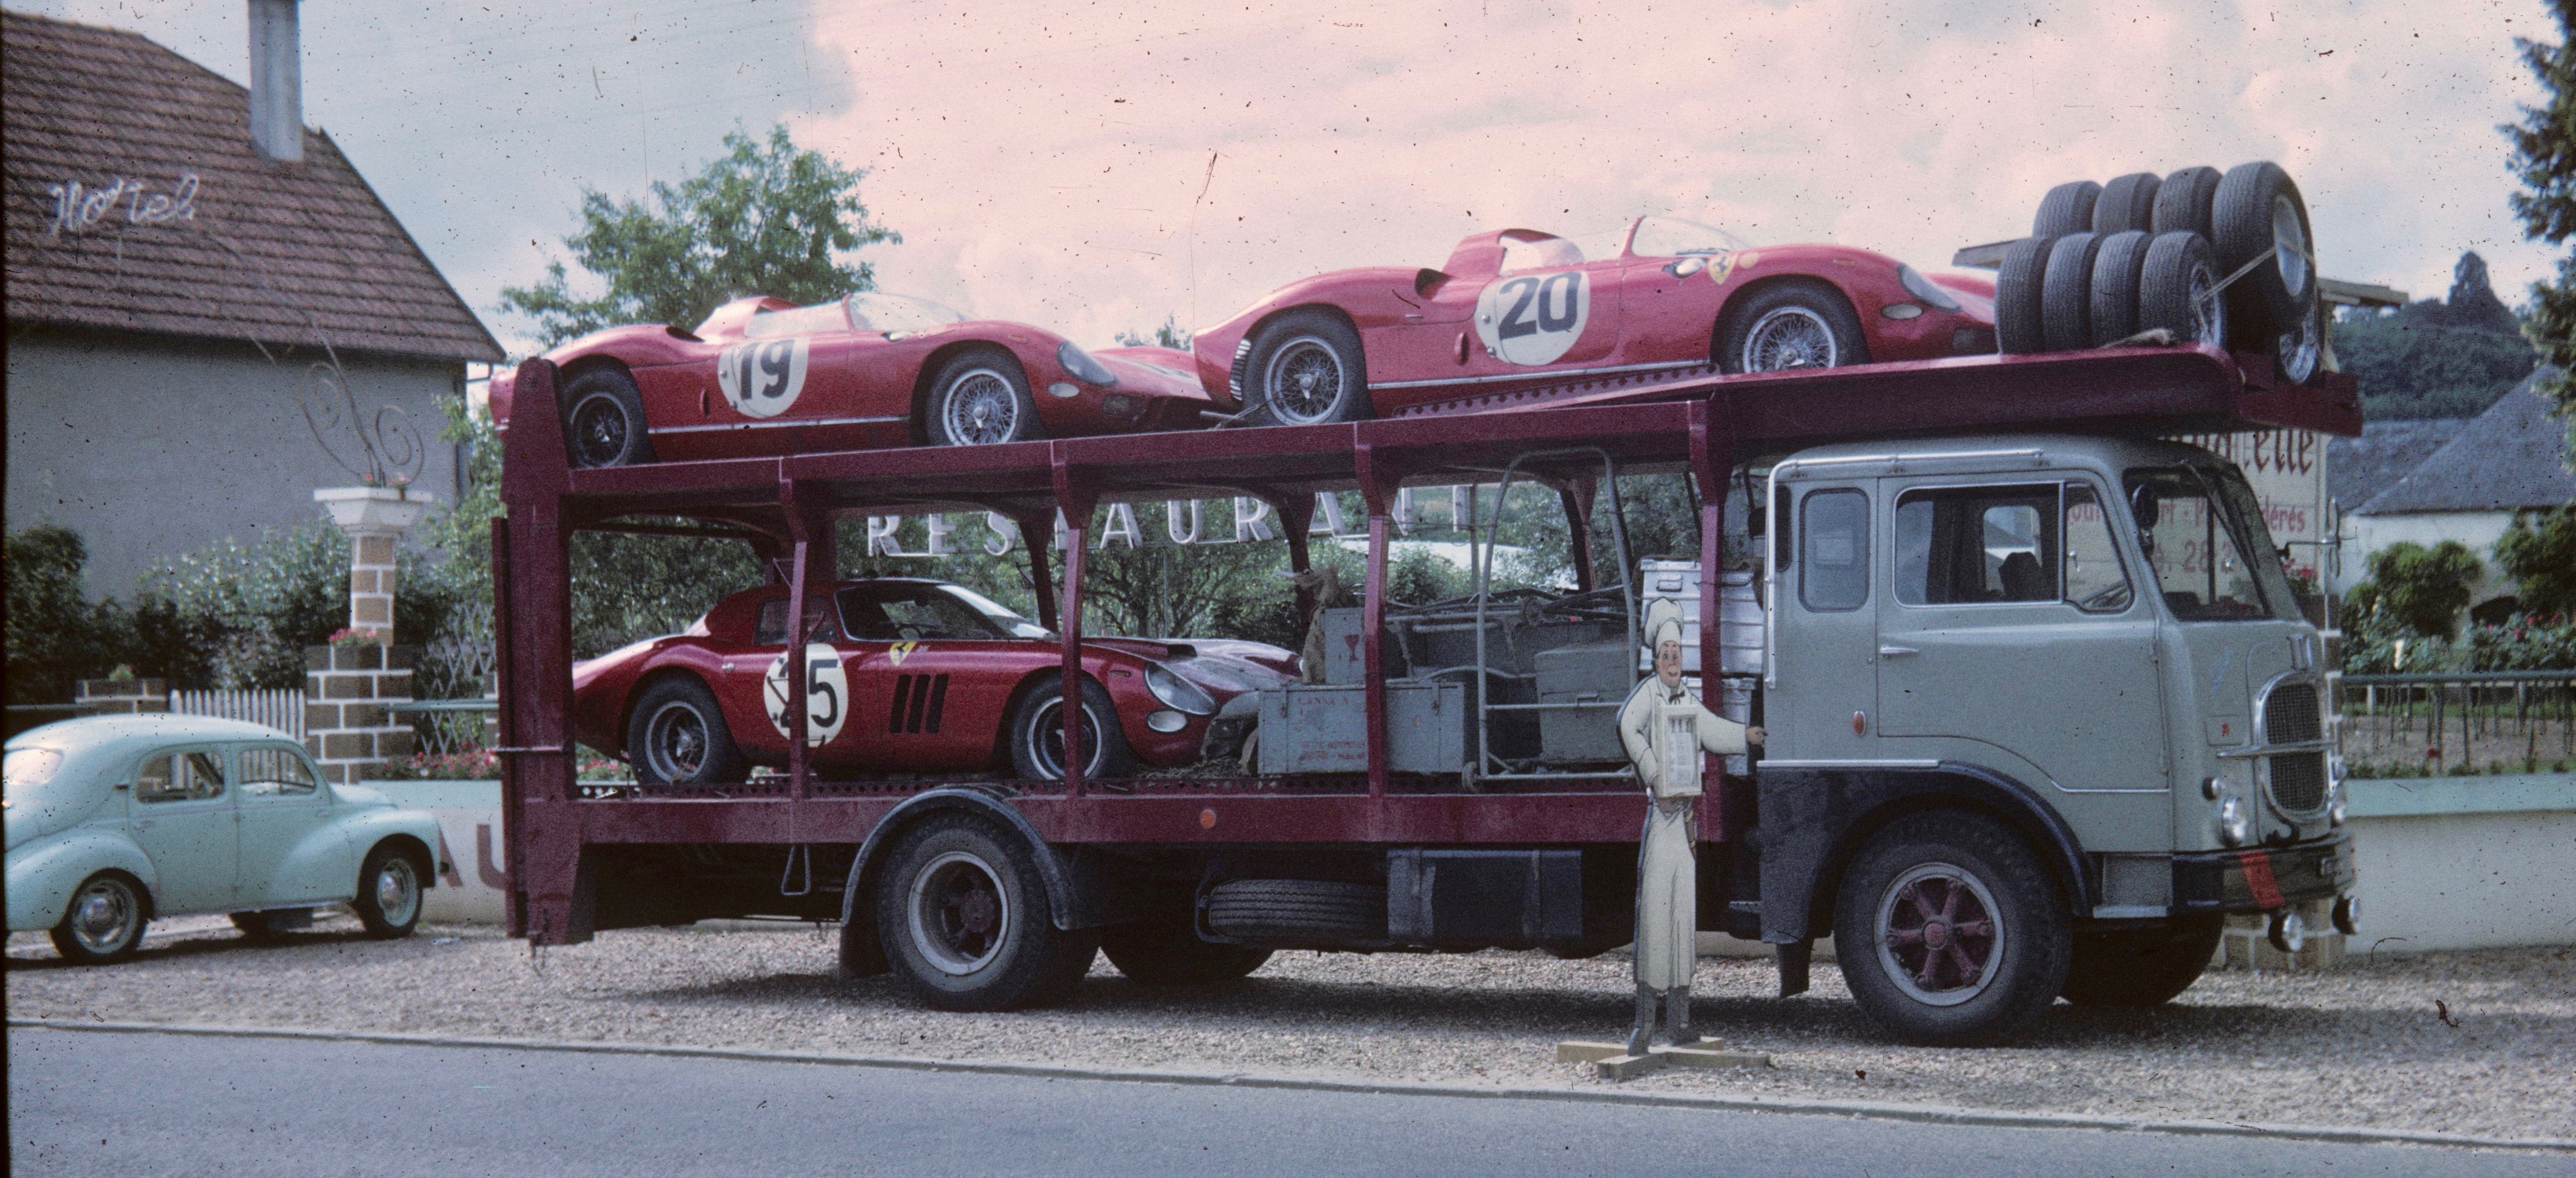 , Le Mans-winning 1964 Ferrari 275 P to headline Artcurial’s Retromobile sale, ClassicCars.com Journal